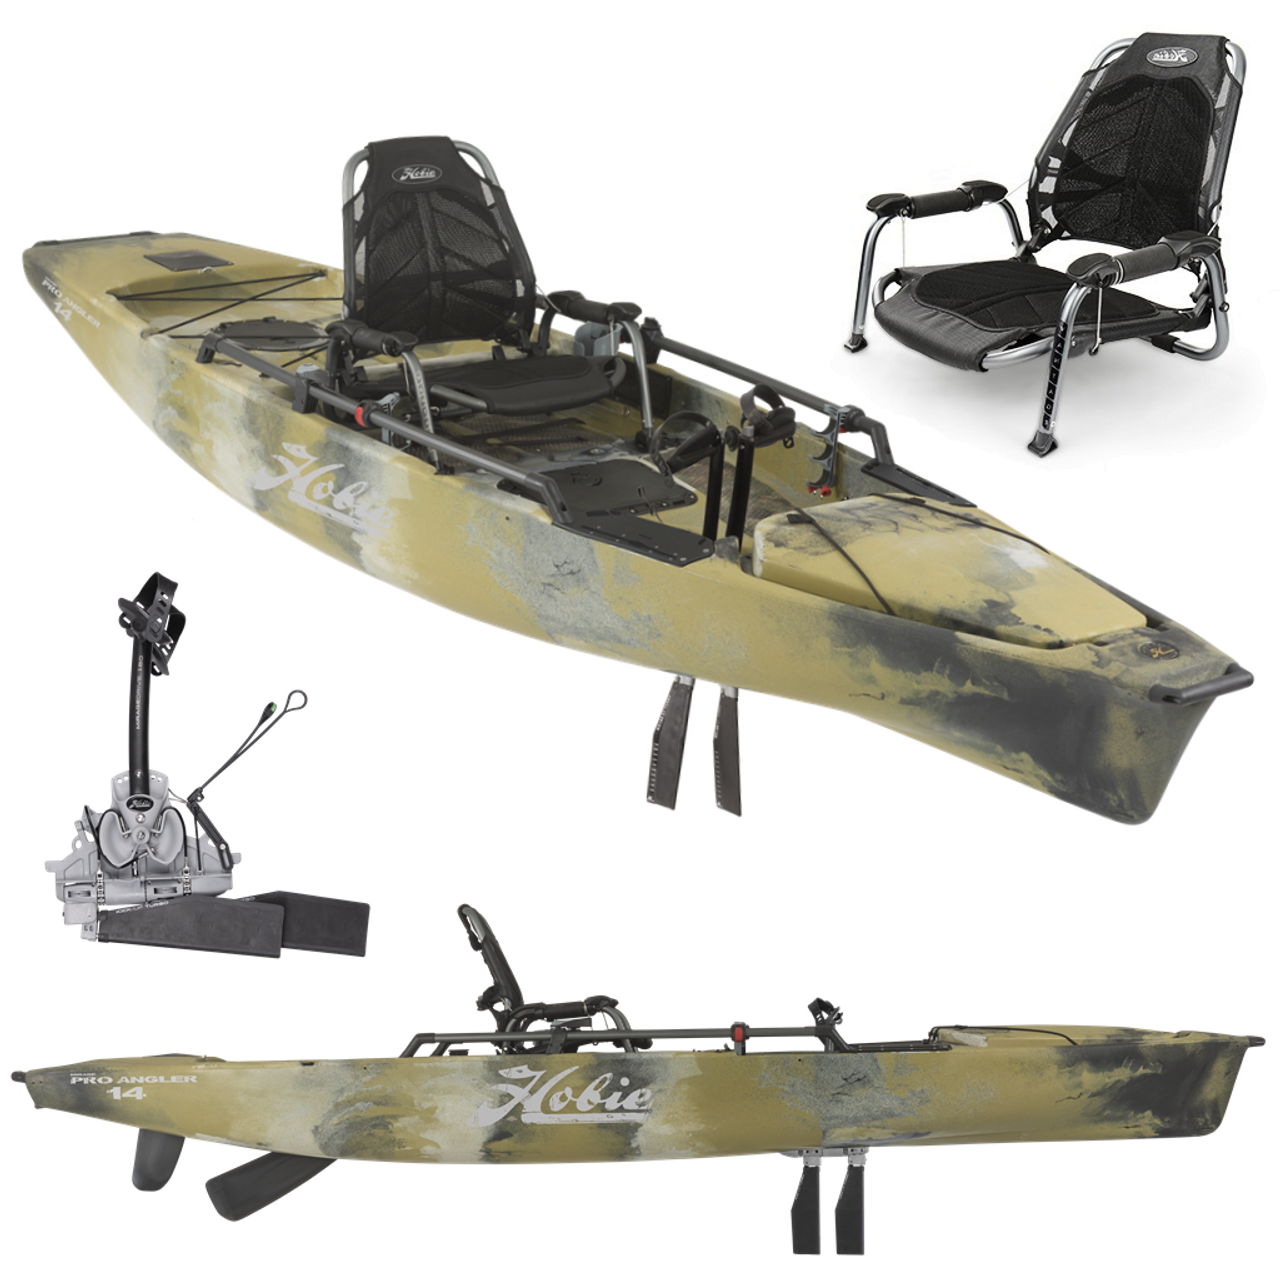 Hobie Mirage Pro Angler 14 - Fishing Kayak with Kick Up Turbo Fins